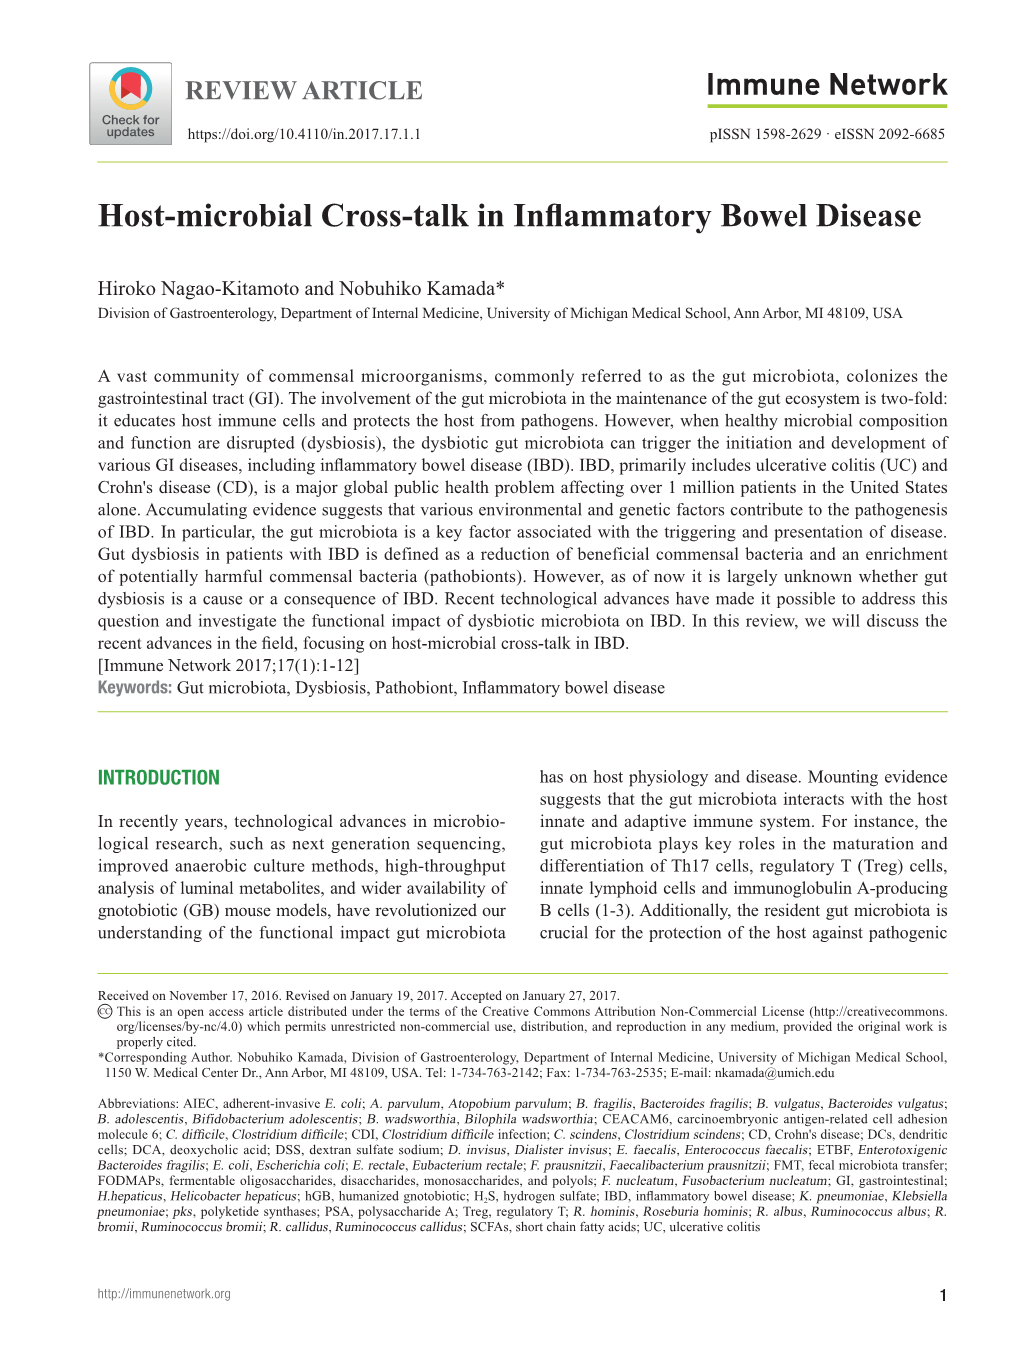 Host-Microbial Cross-Talk in Inflammatory Bowel Disease